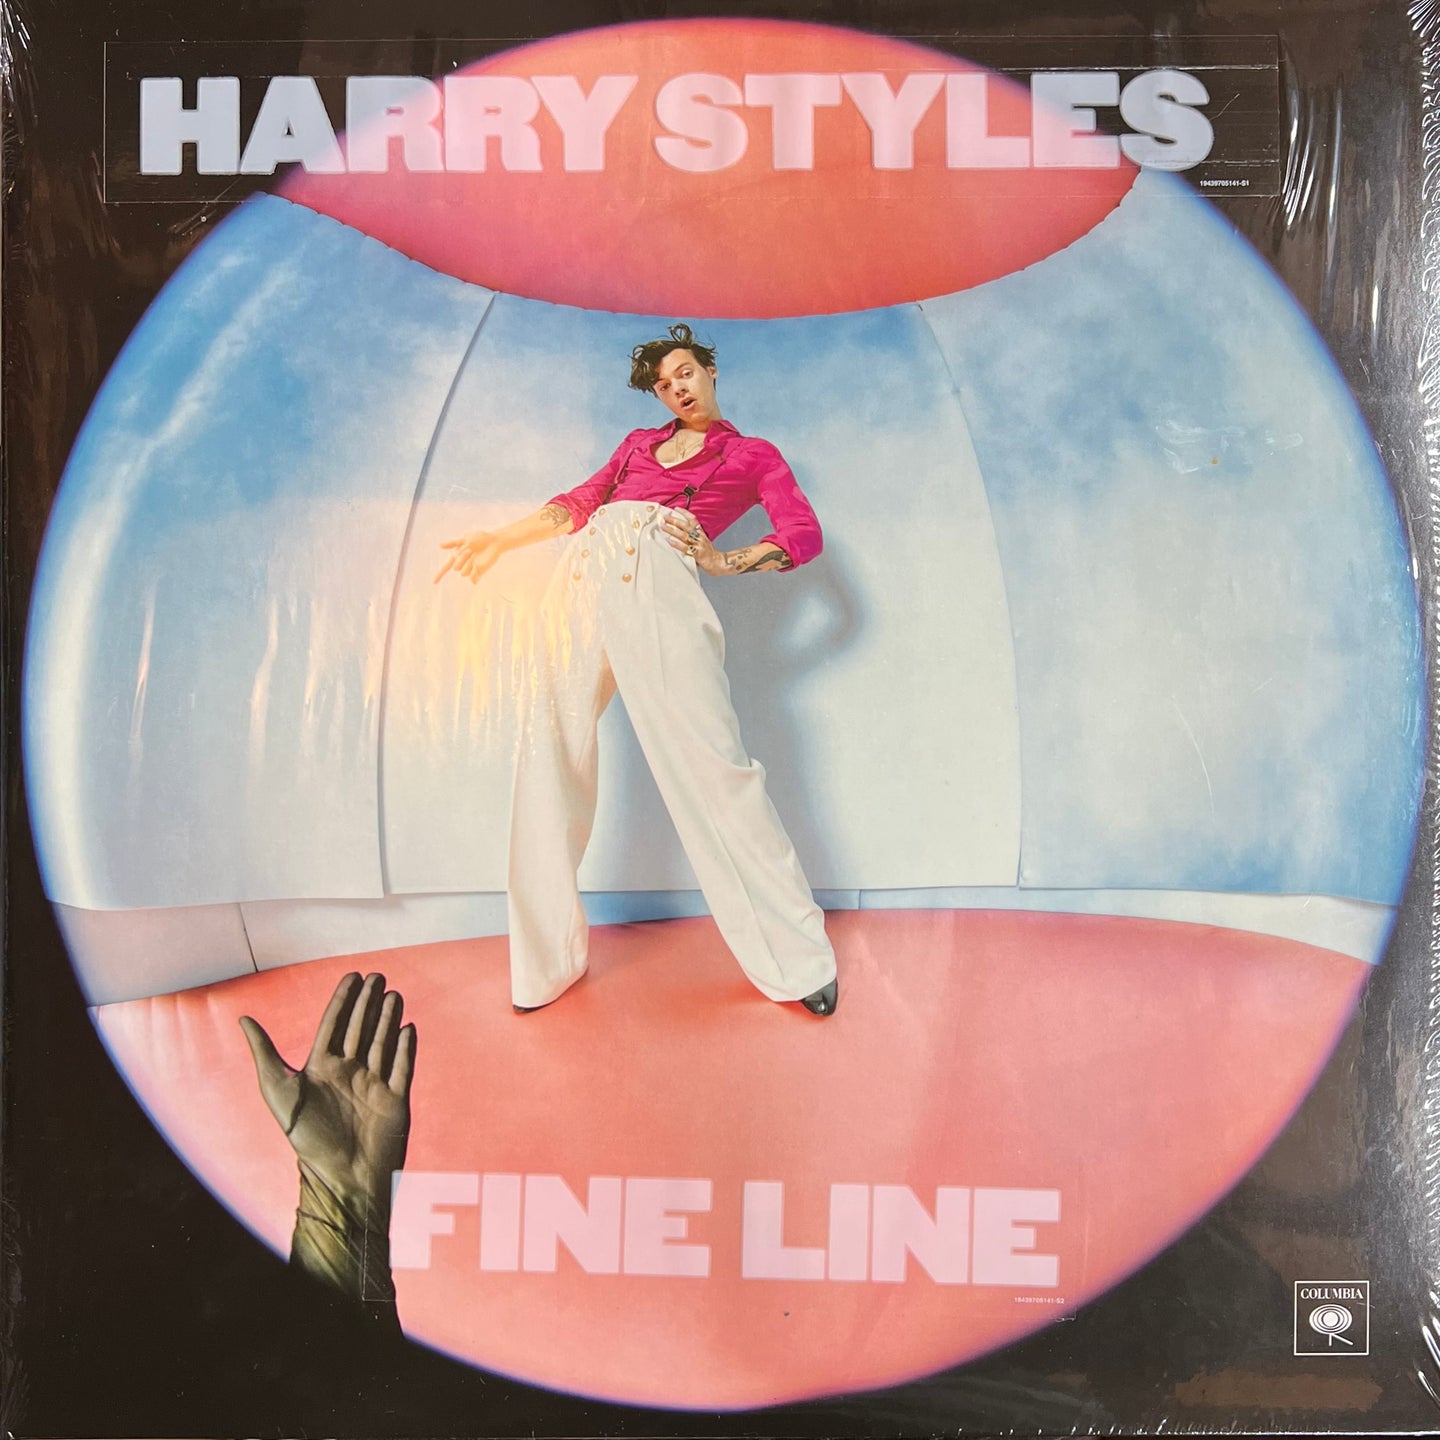 Harry Styles - Fine line